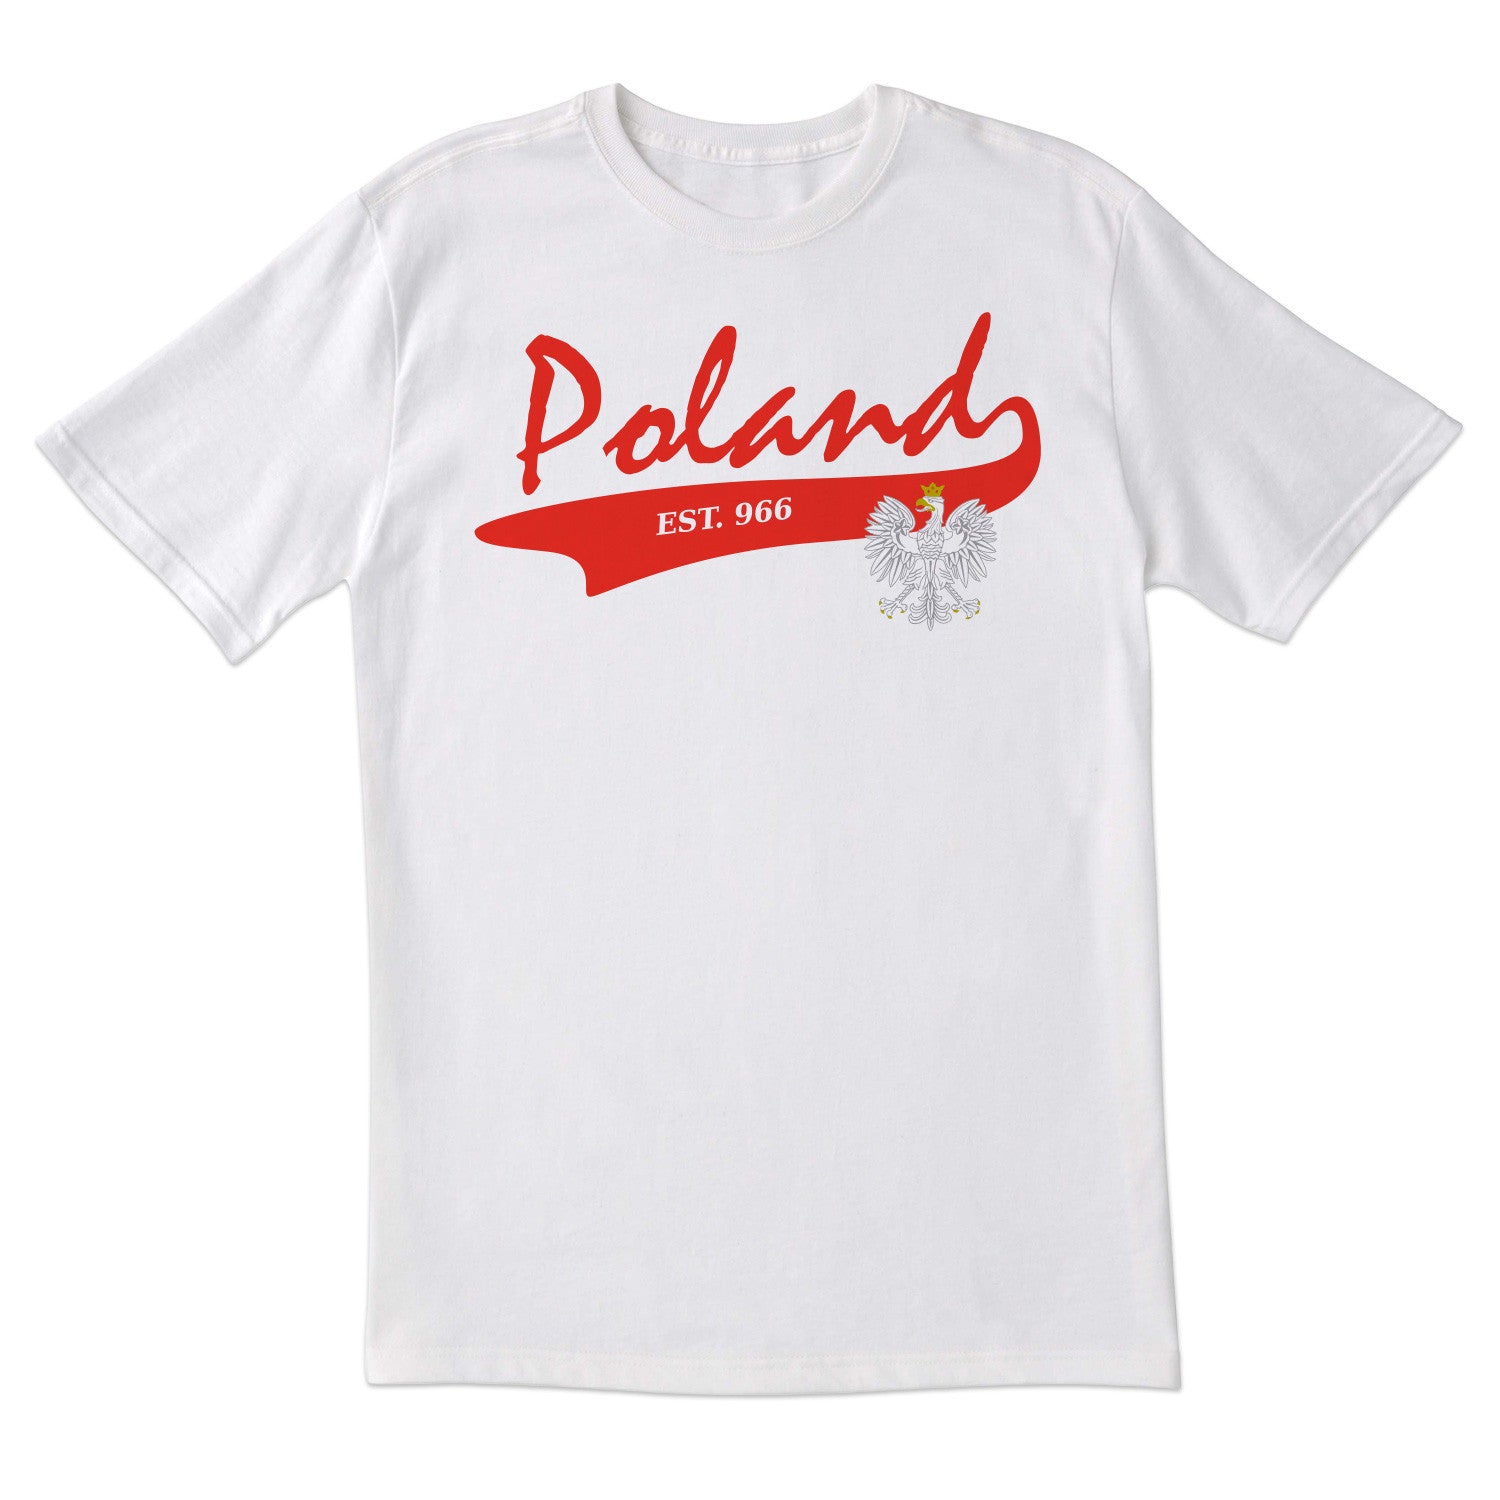 Poland College Short Sleeve Tshirt